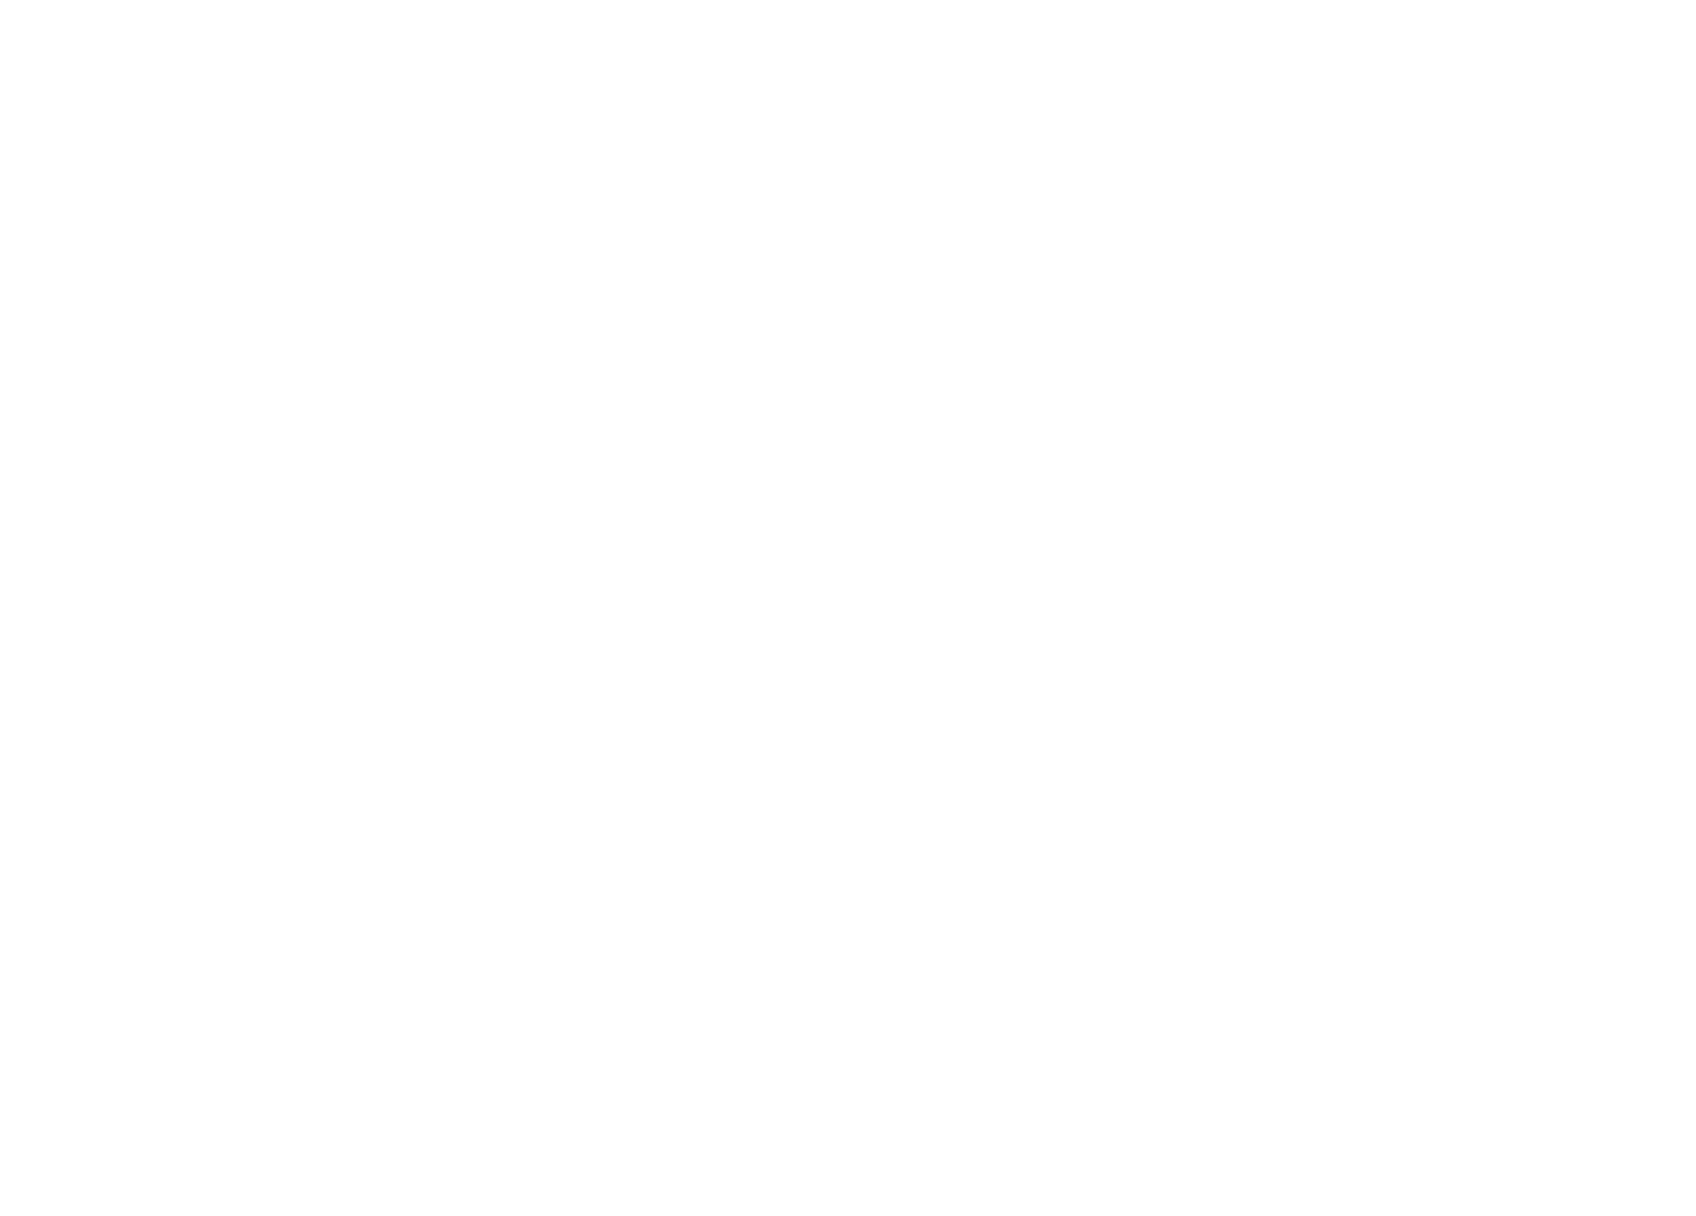 Breakfast Company Logo - Big Breakfast